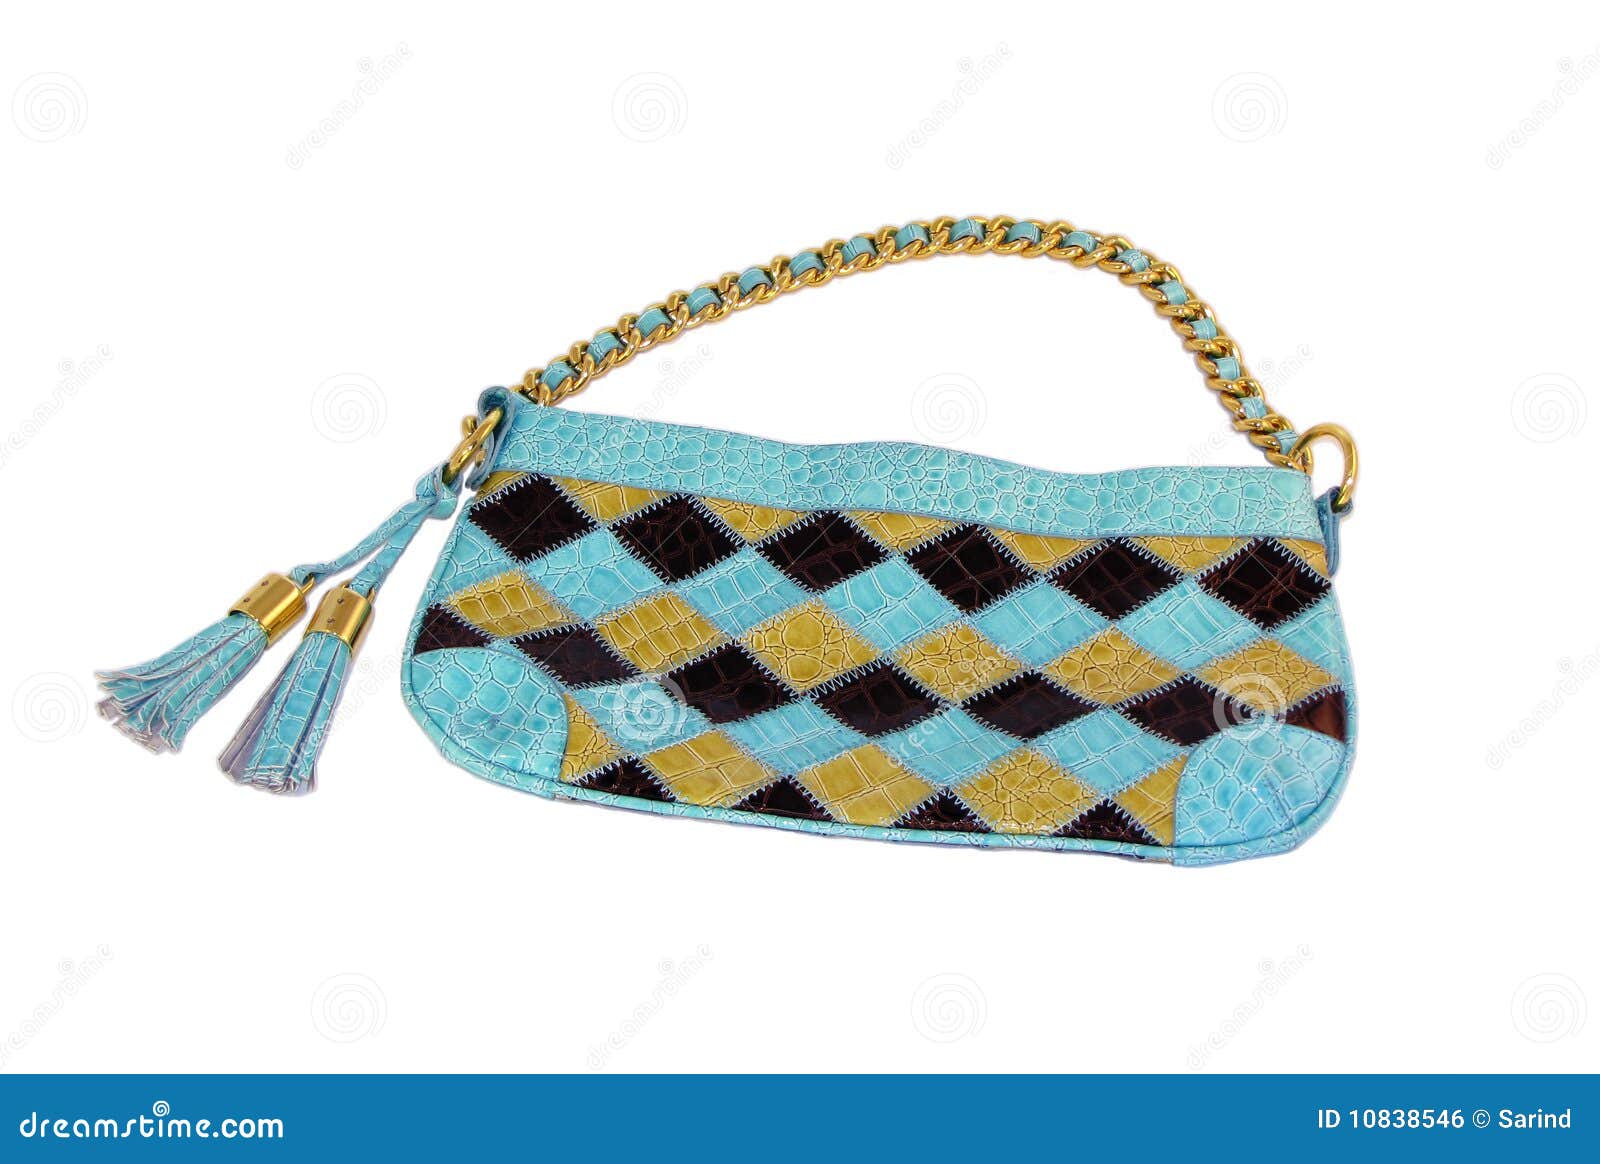 lady shoulder handbag with gold chain